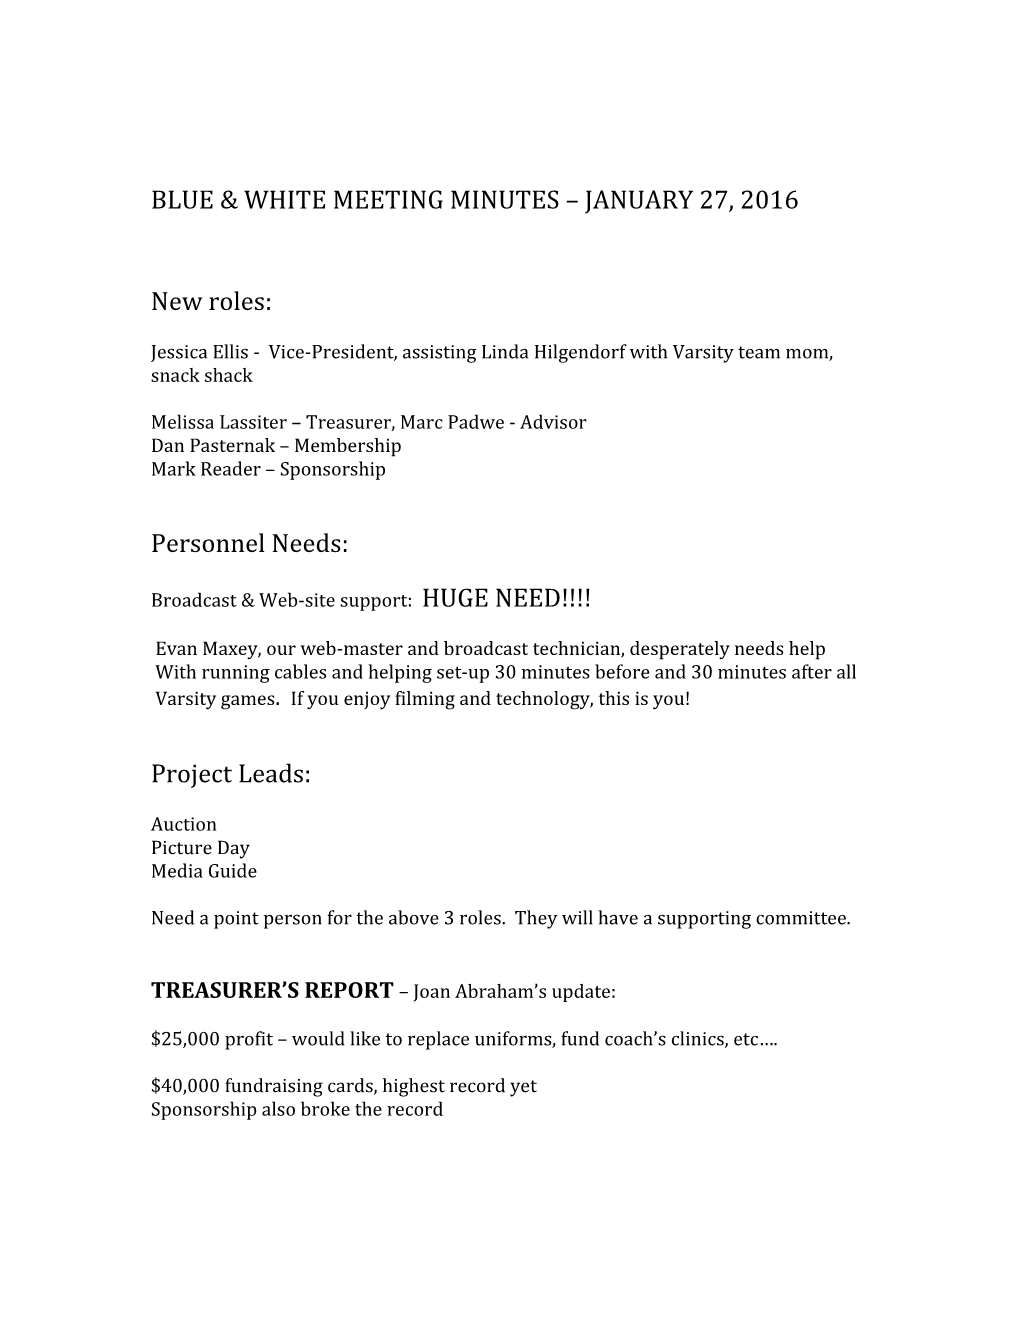 Blue & White Meeting Minutes January 27, 2016